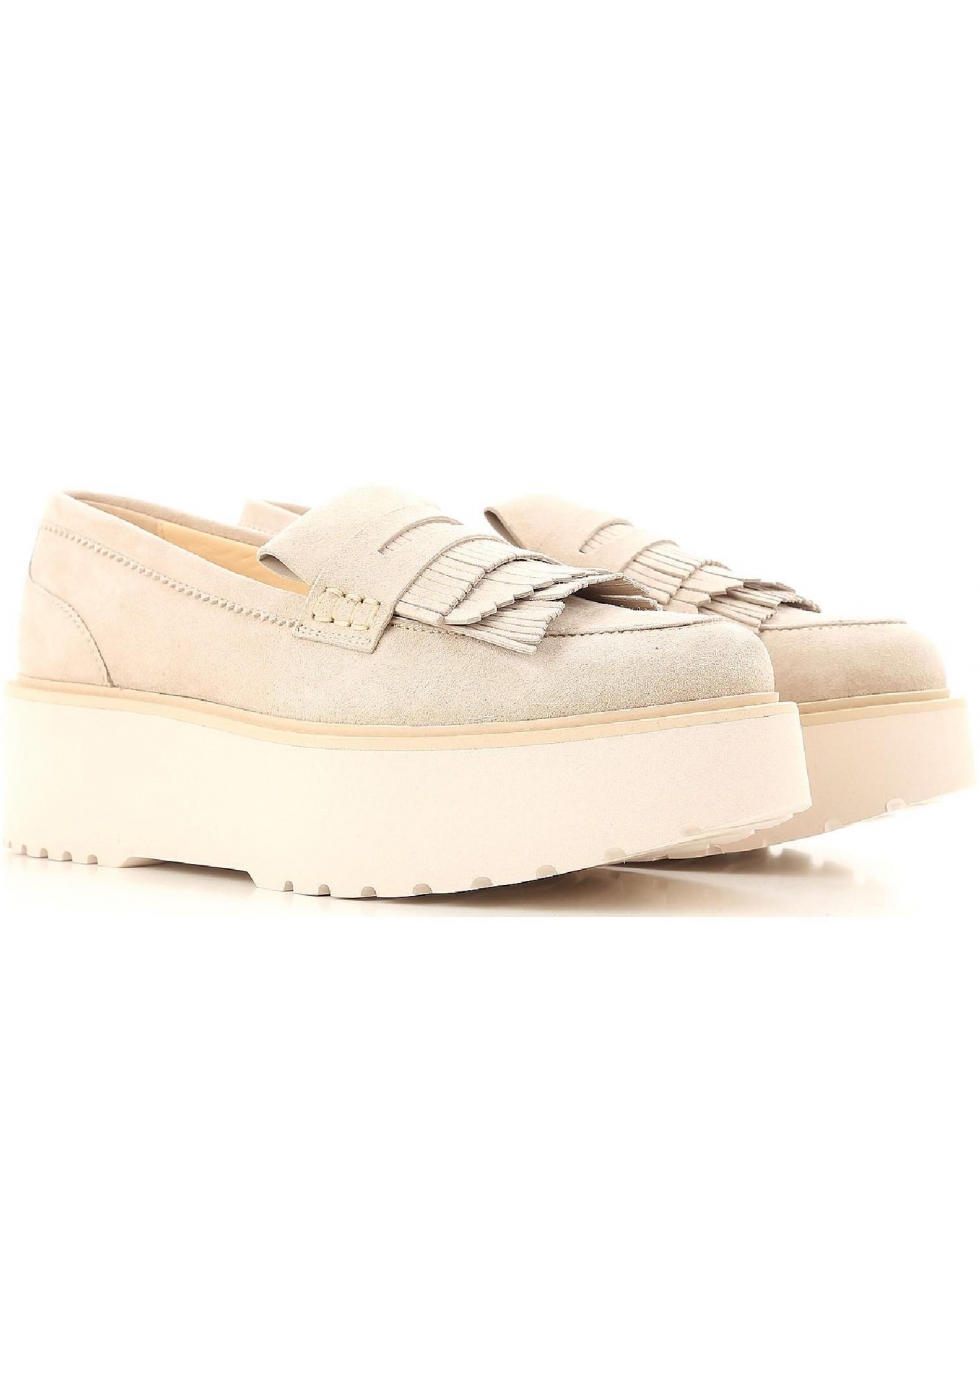 Hogan women's wedges loafers shoes in beige suede - Italian Boutique